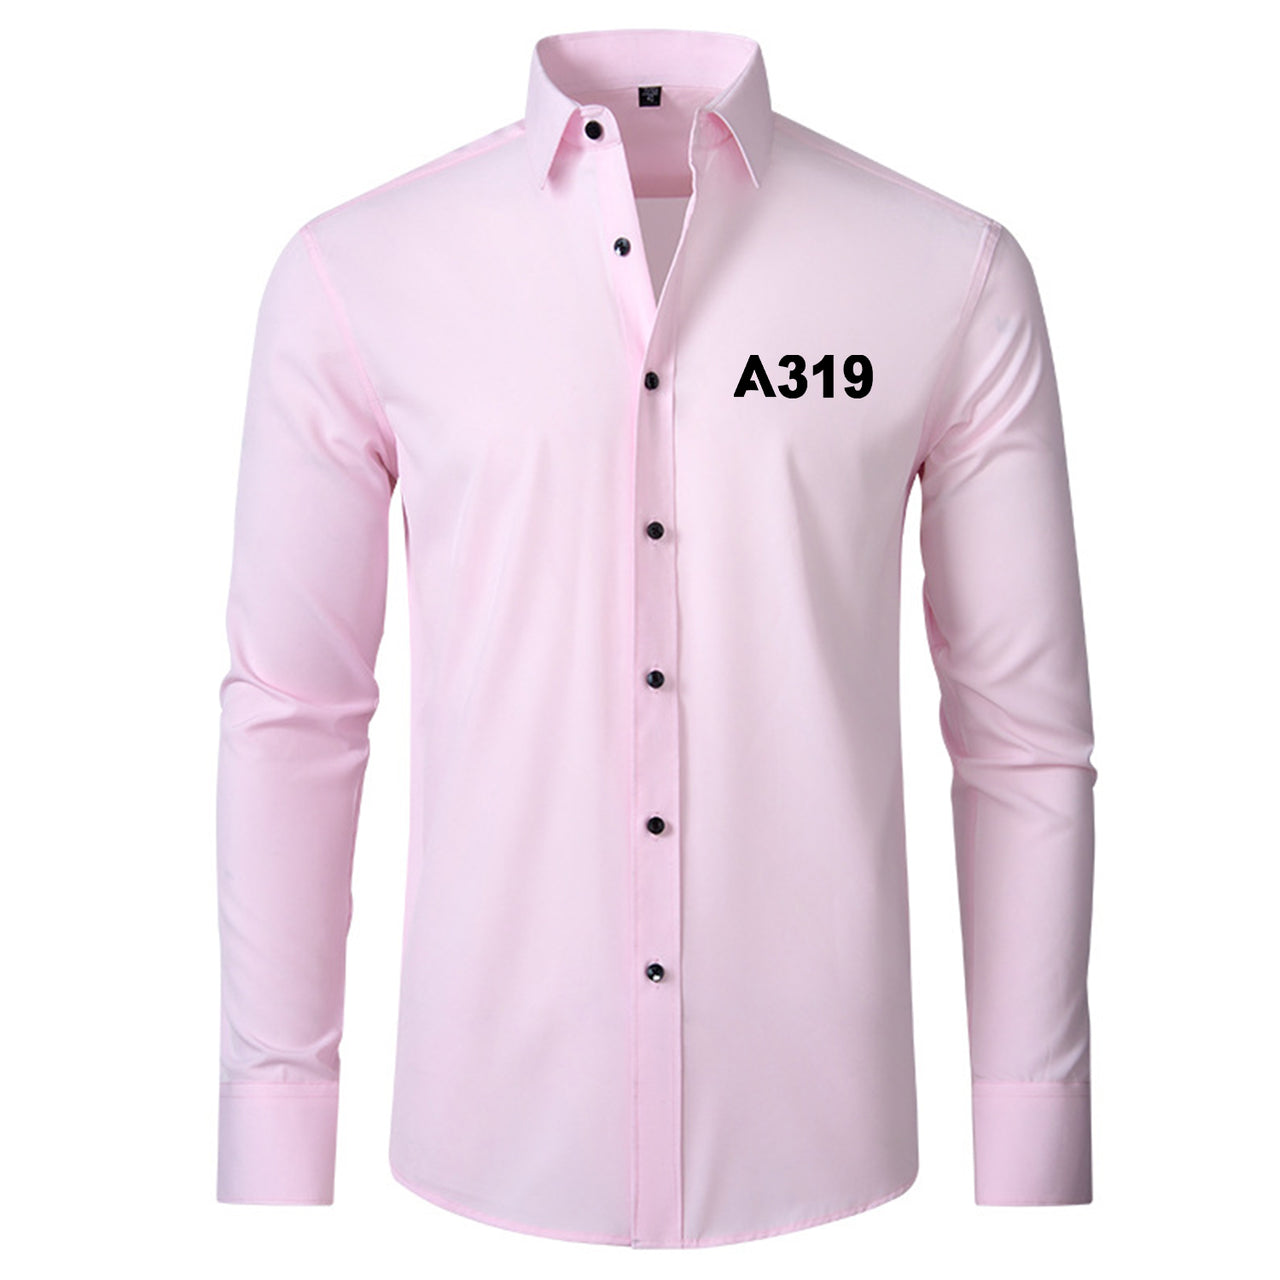 A319 Flat Text Designed Long Sleeve Shirts